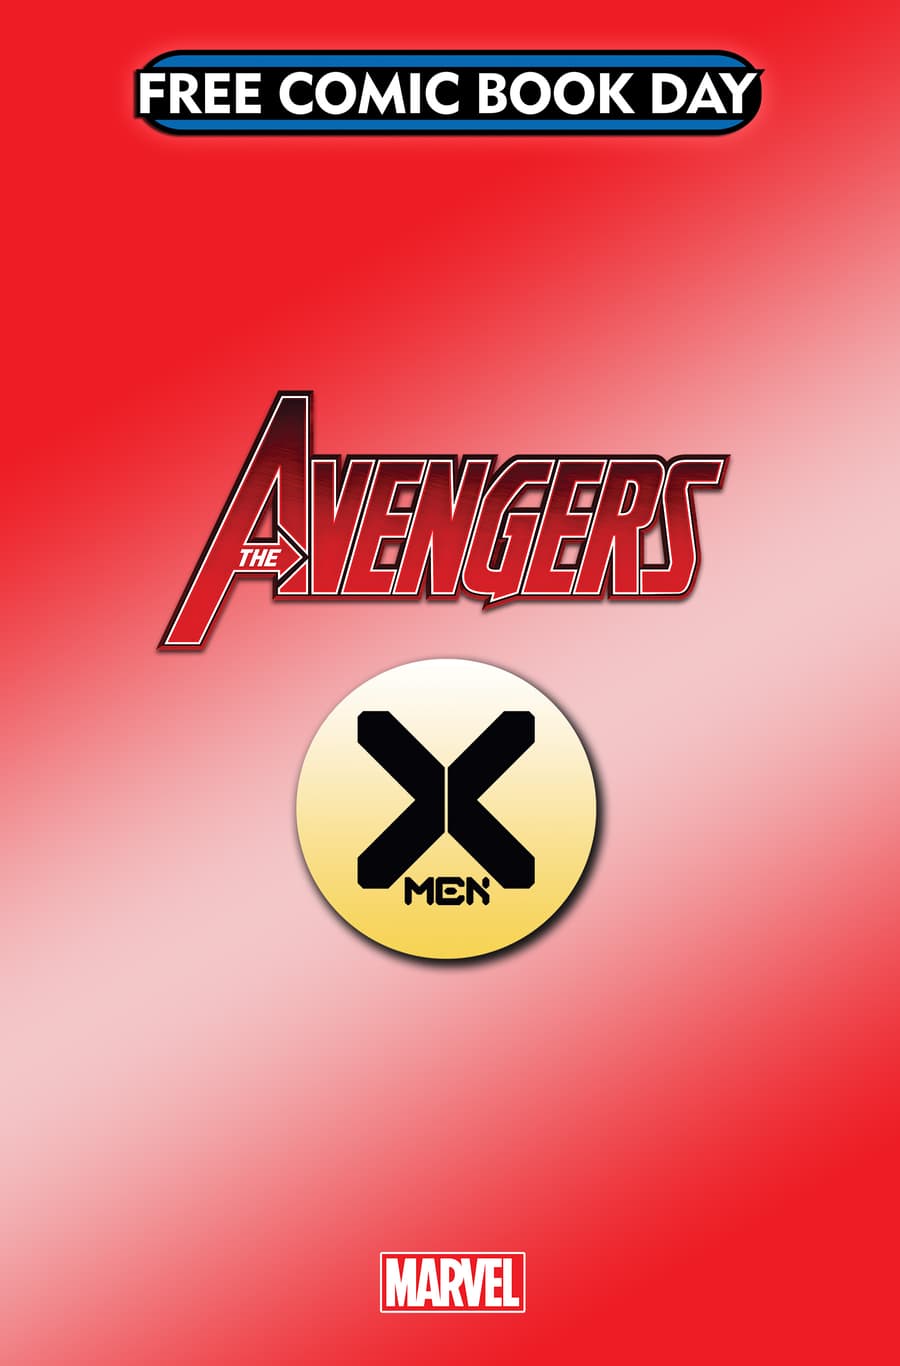 FREE COMIC BOOK DAY: AVENGERS/X-MEN #1